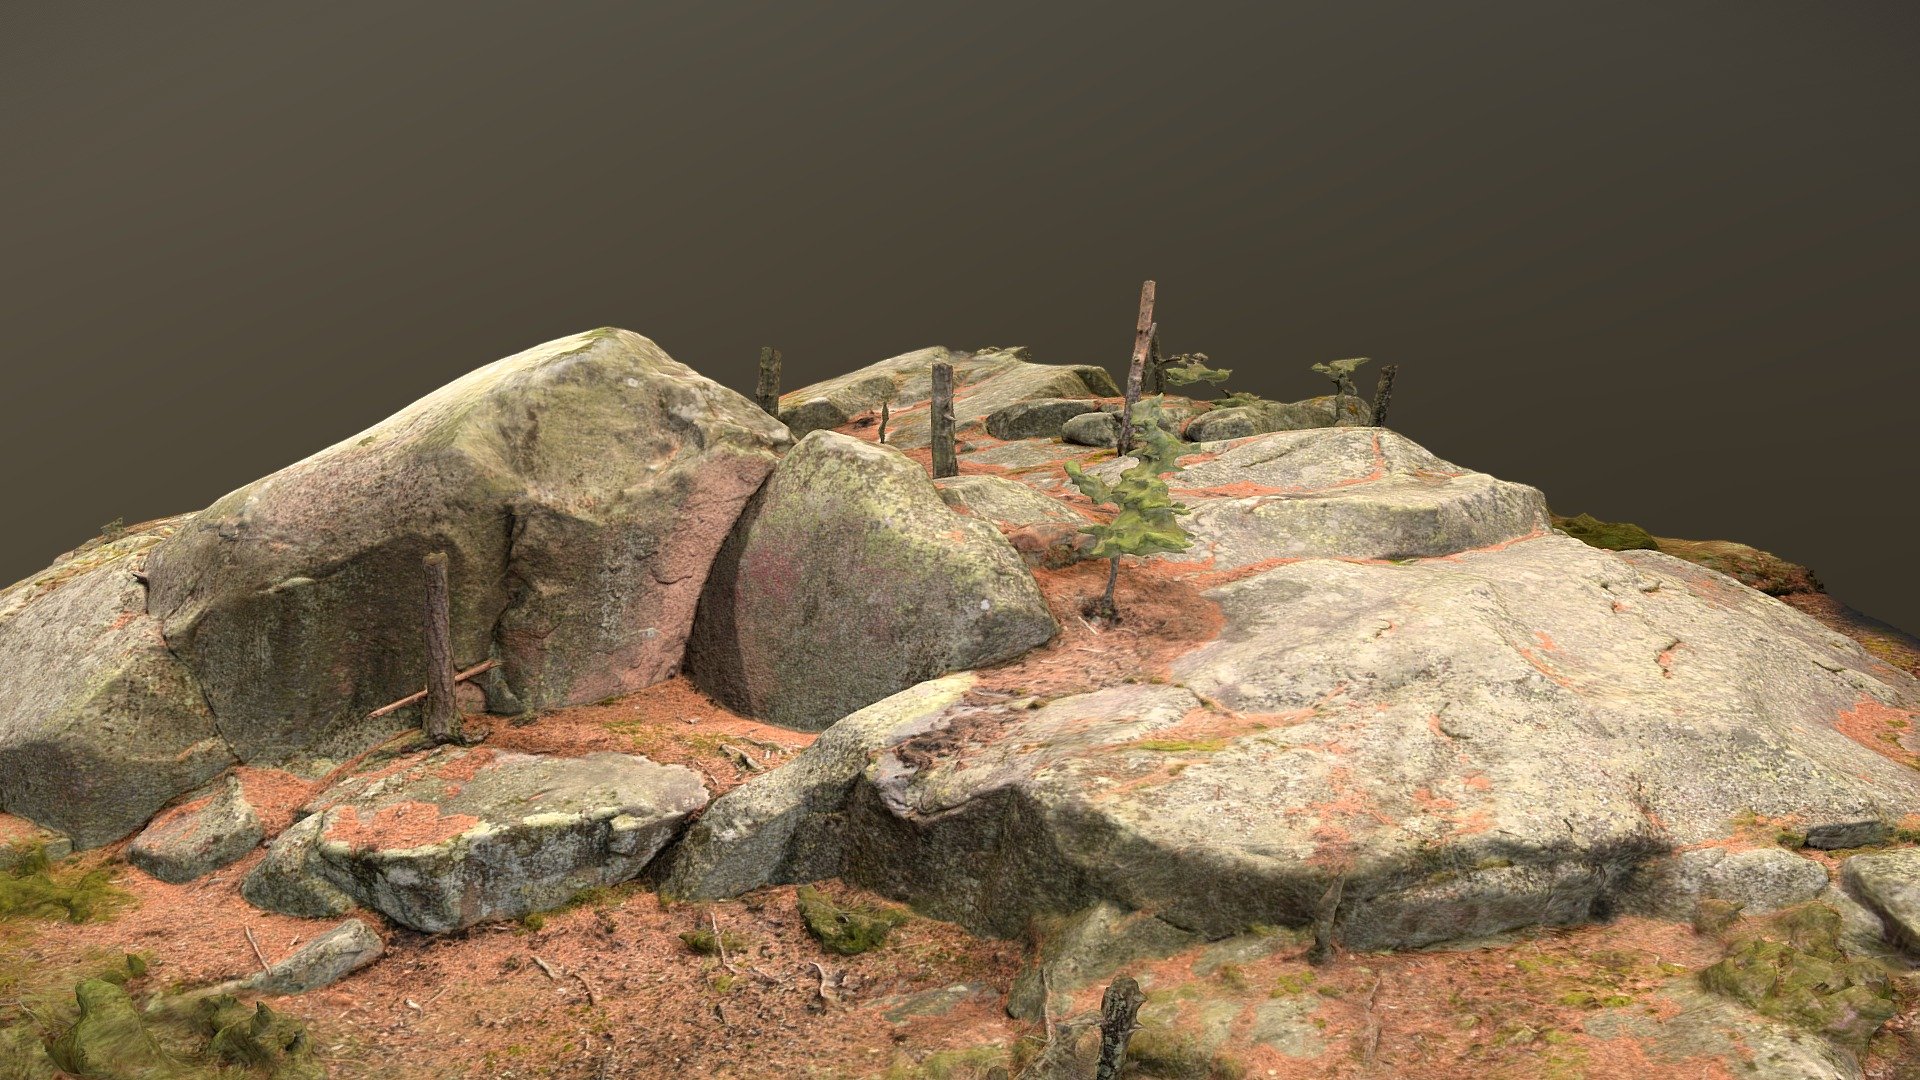 A rock terrain.

Photos taken with D5300 + Anafi 3d model